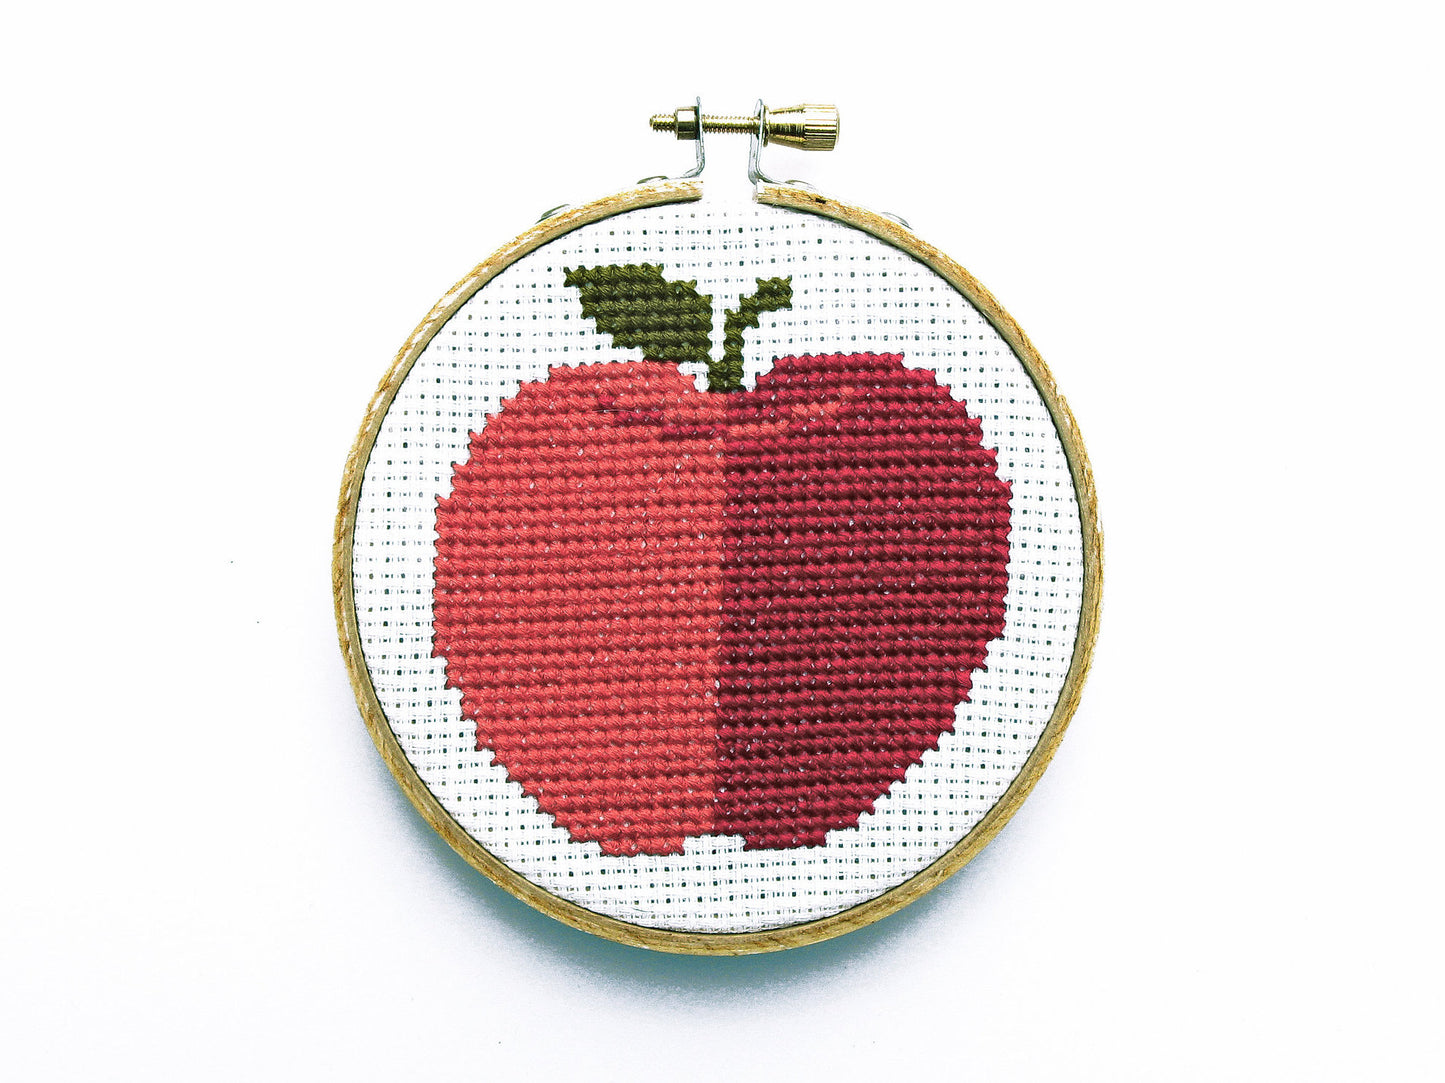 Apple cross stitch kit